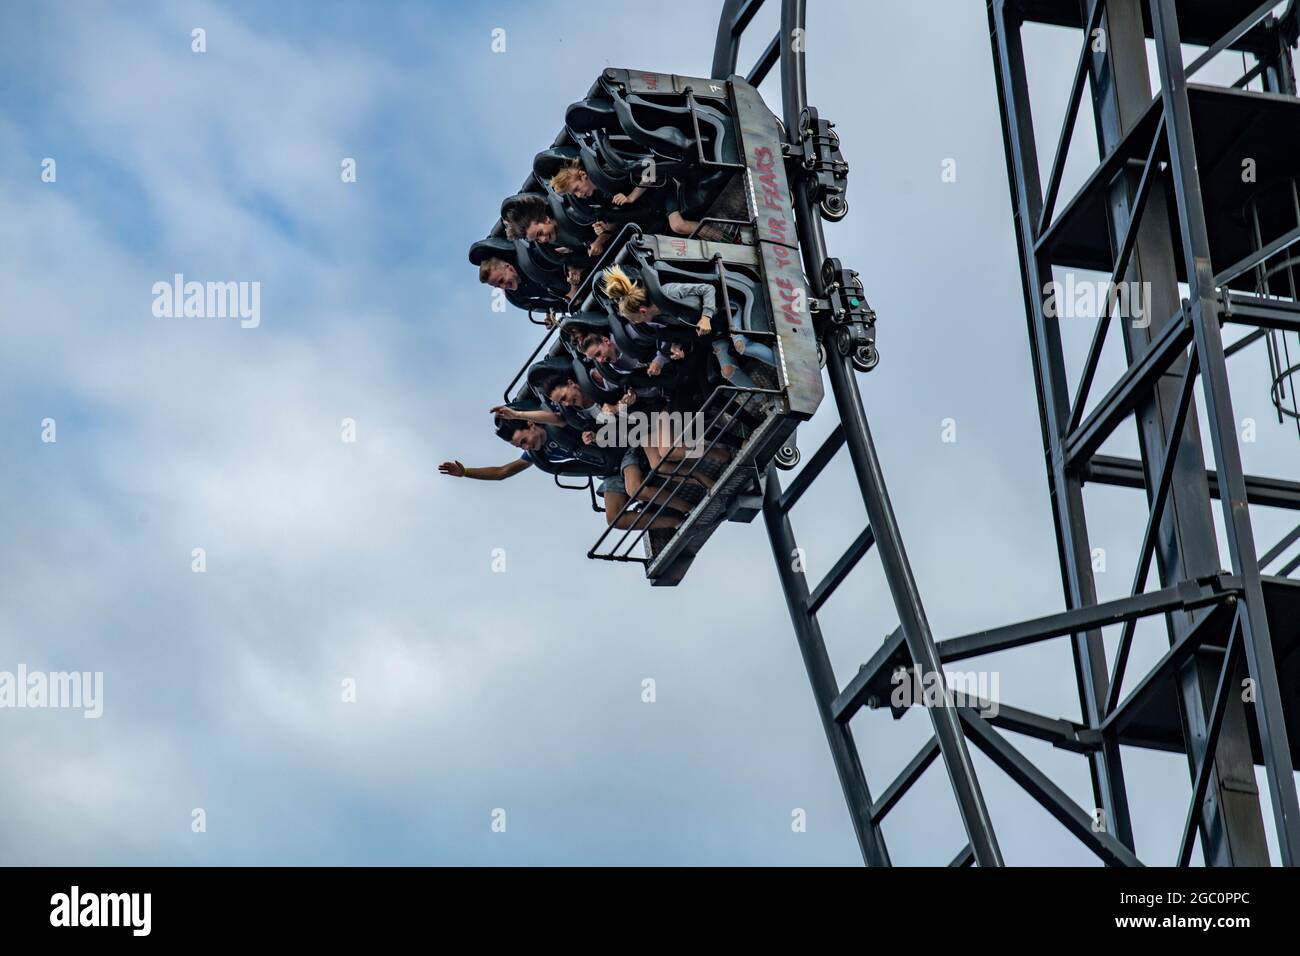 Saw The Ride JIGSAW Killer Movie Themed Rollercoaster Thorpe PArk Theme Park Panning Shots Stock Photo